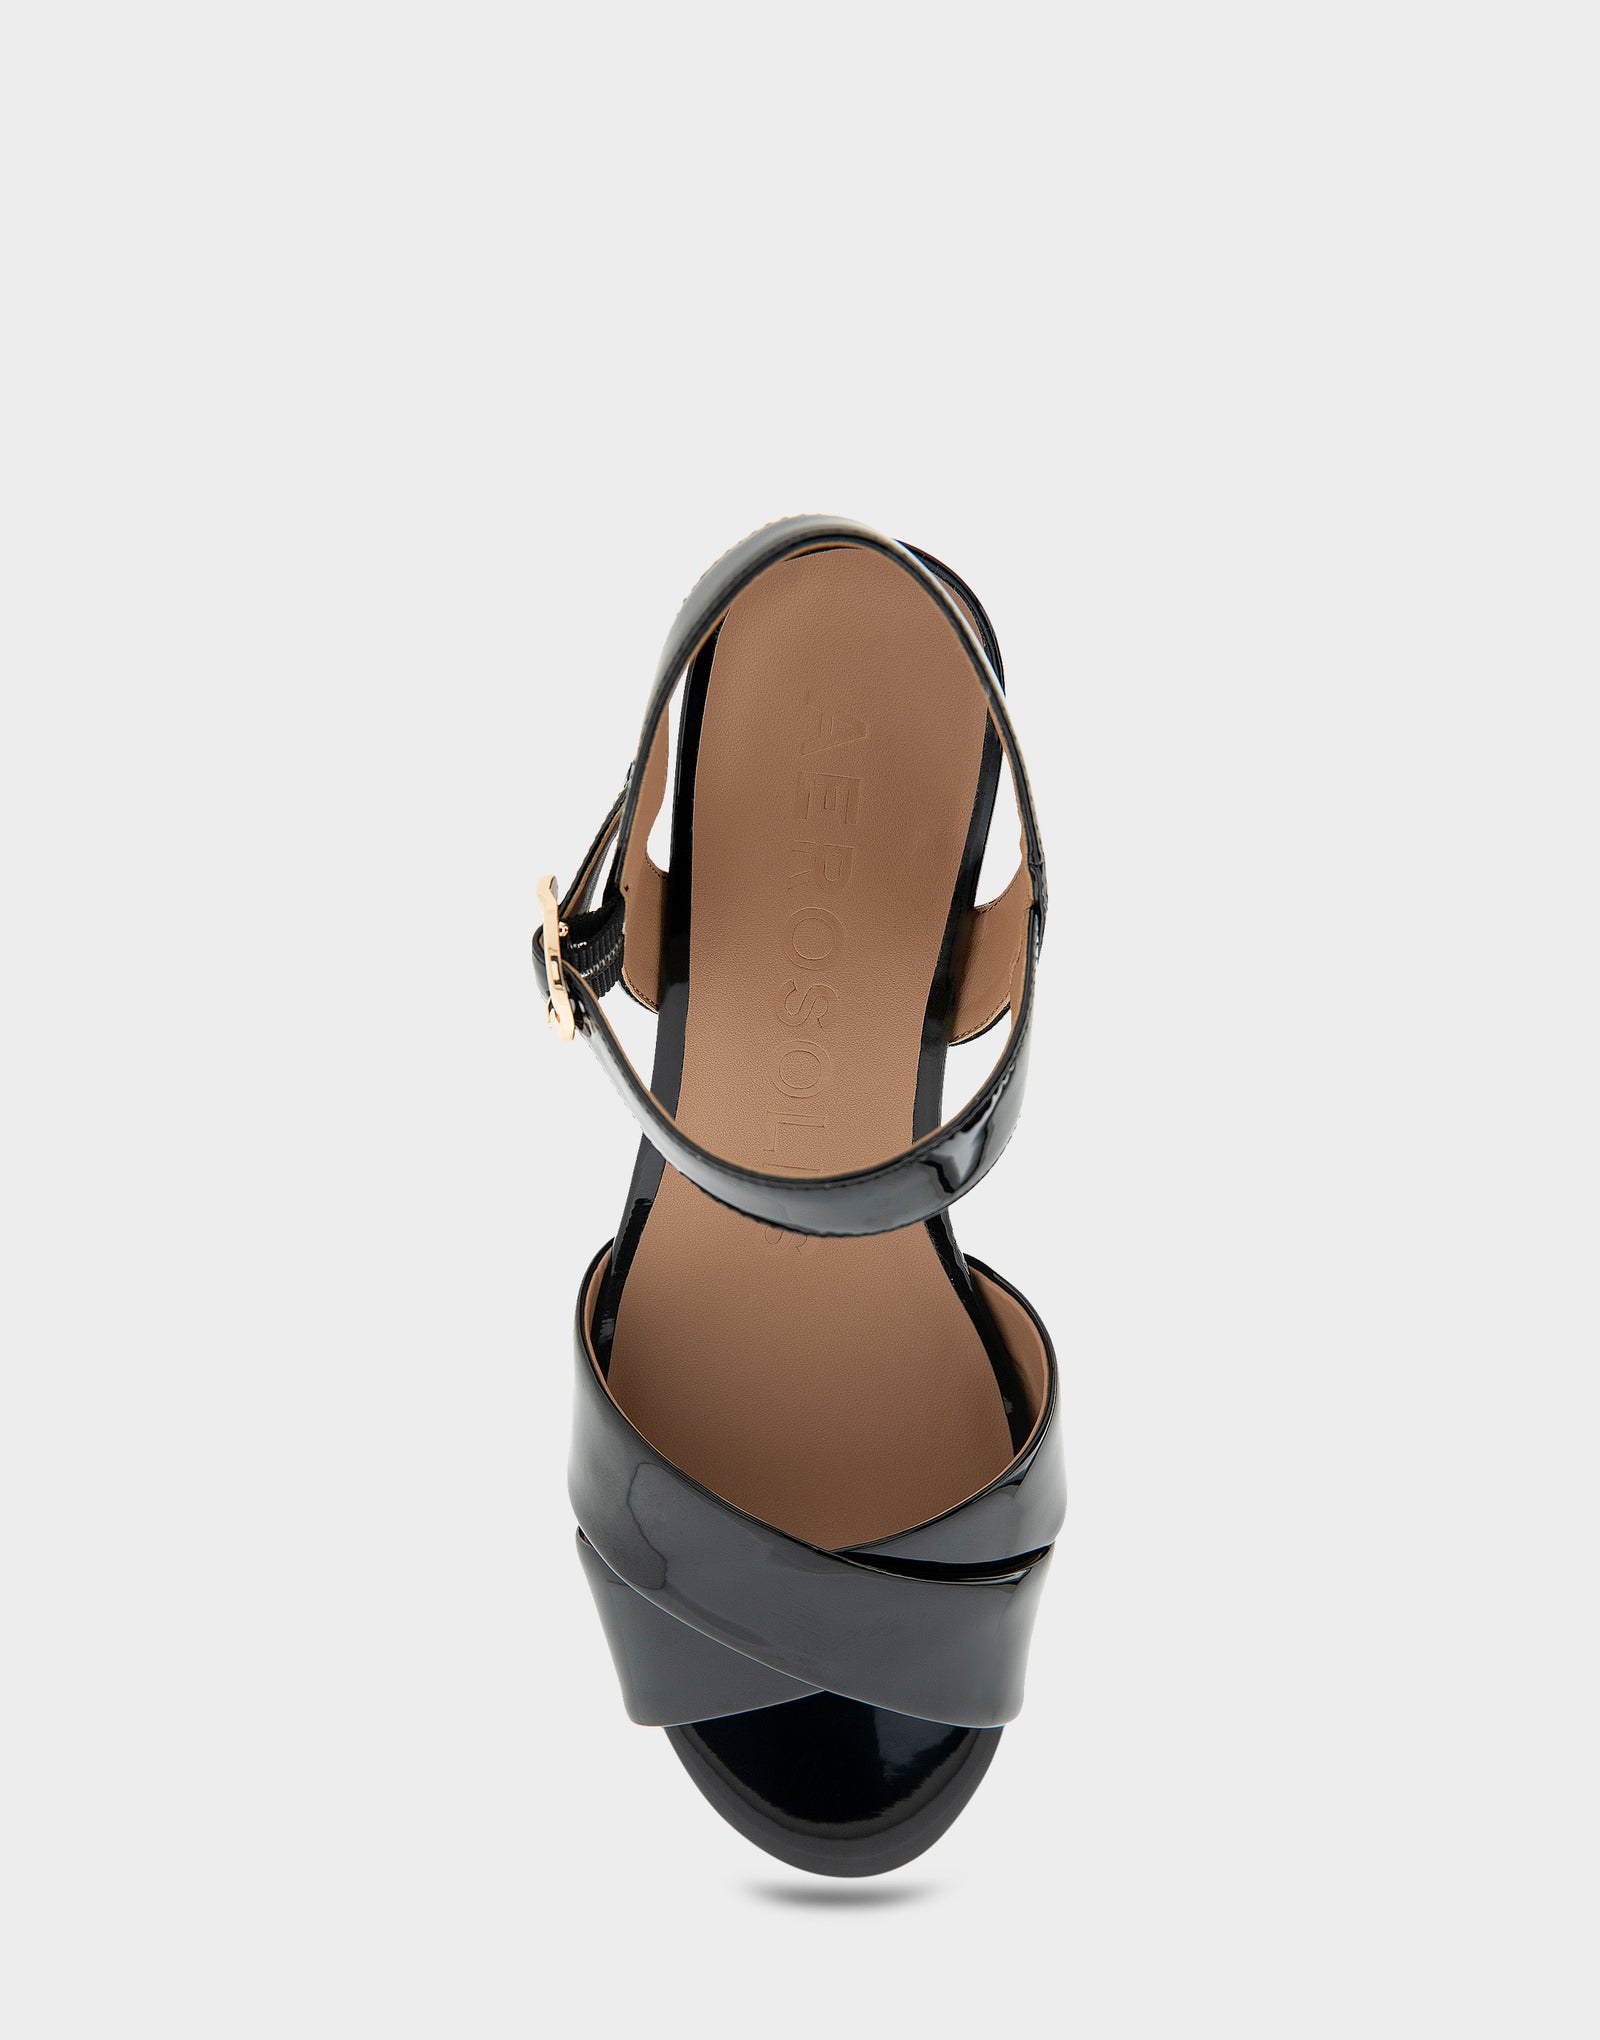 Women's Crisscross Platform Sandal in Black Patent Faux Leather